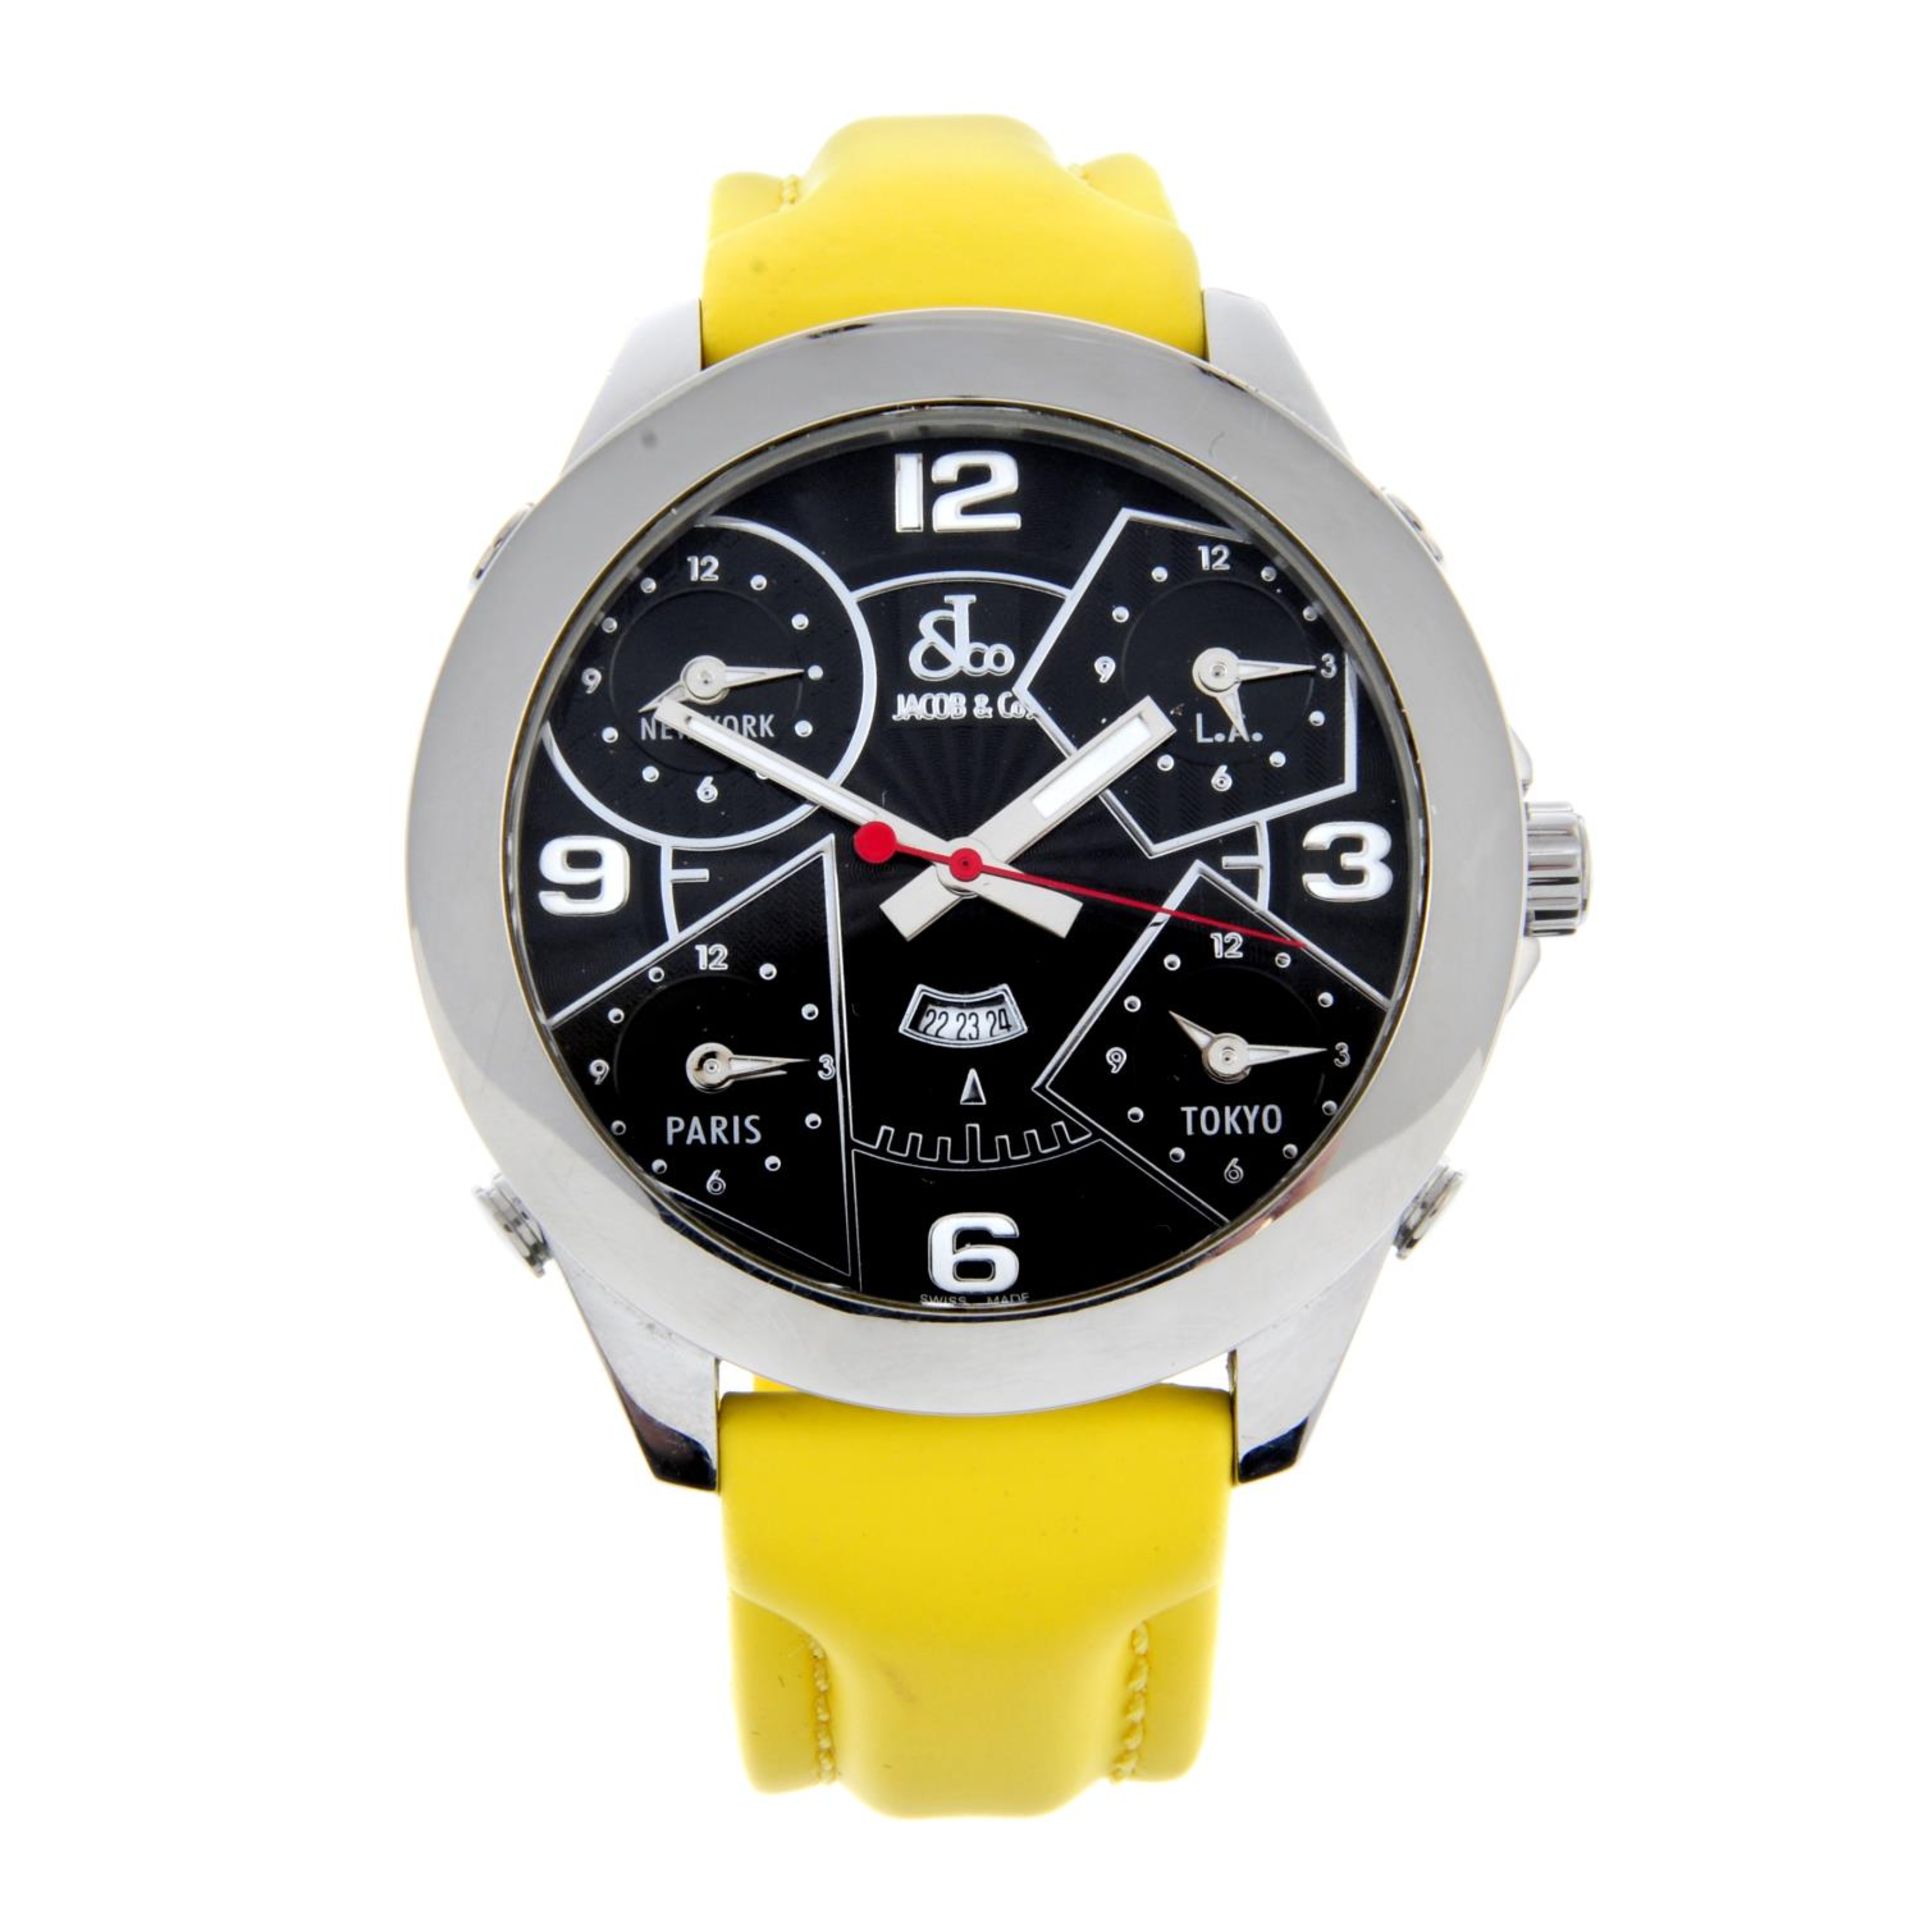 JACOB & CO. - a gentleman's Five Time Zone wrist watch.